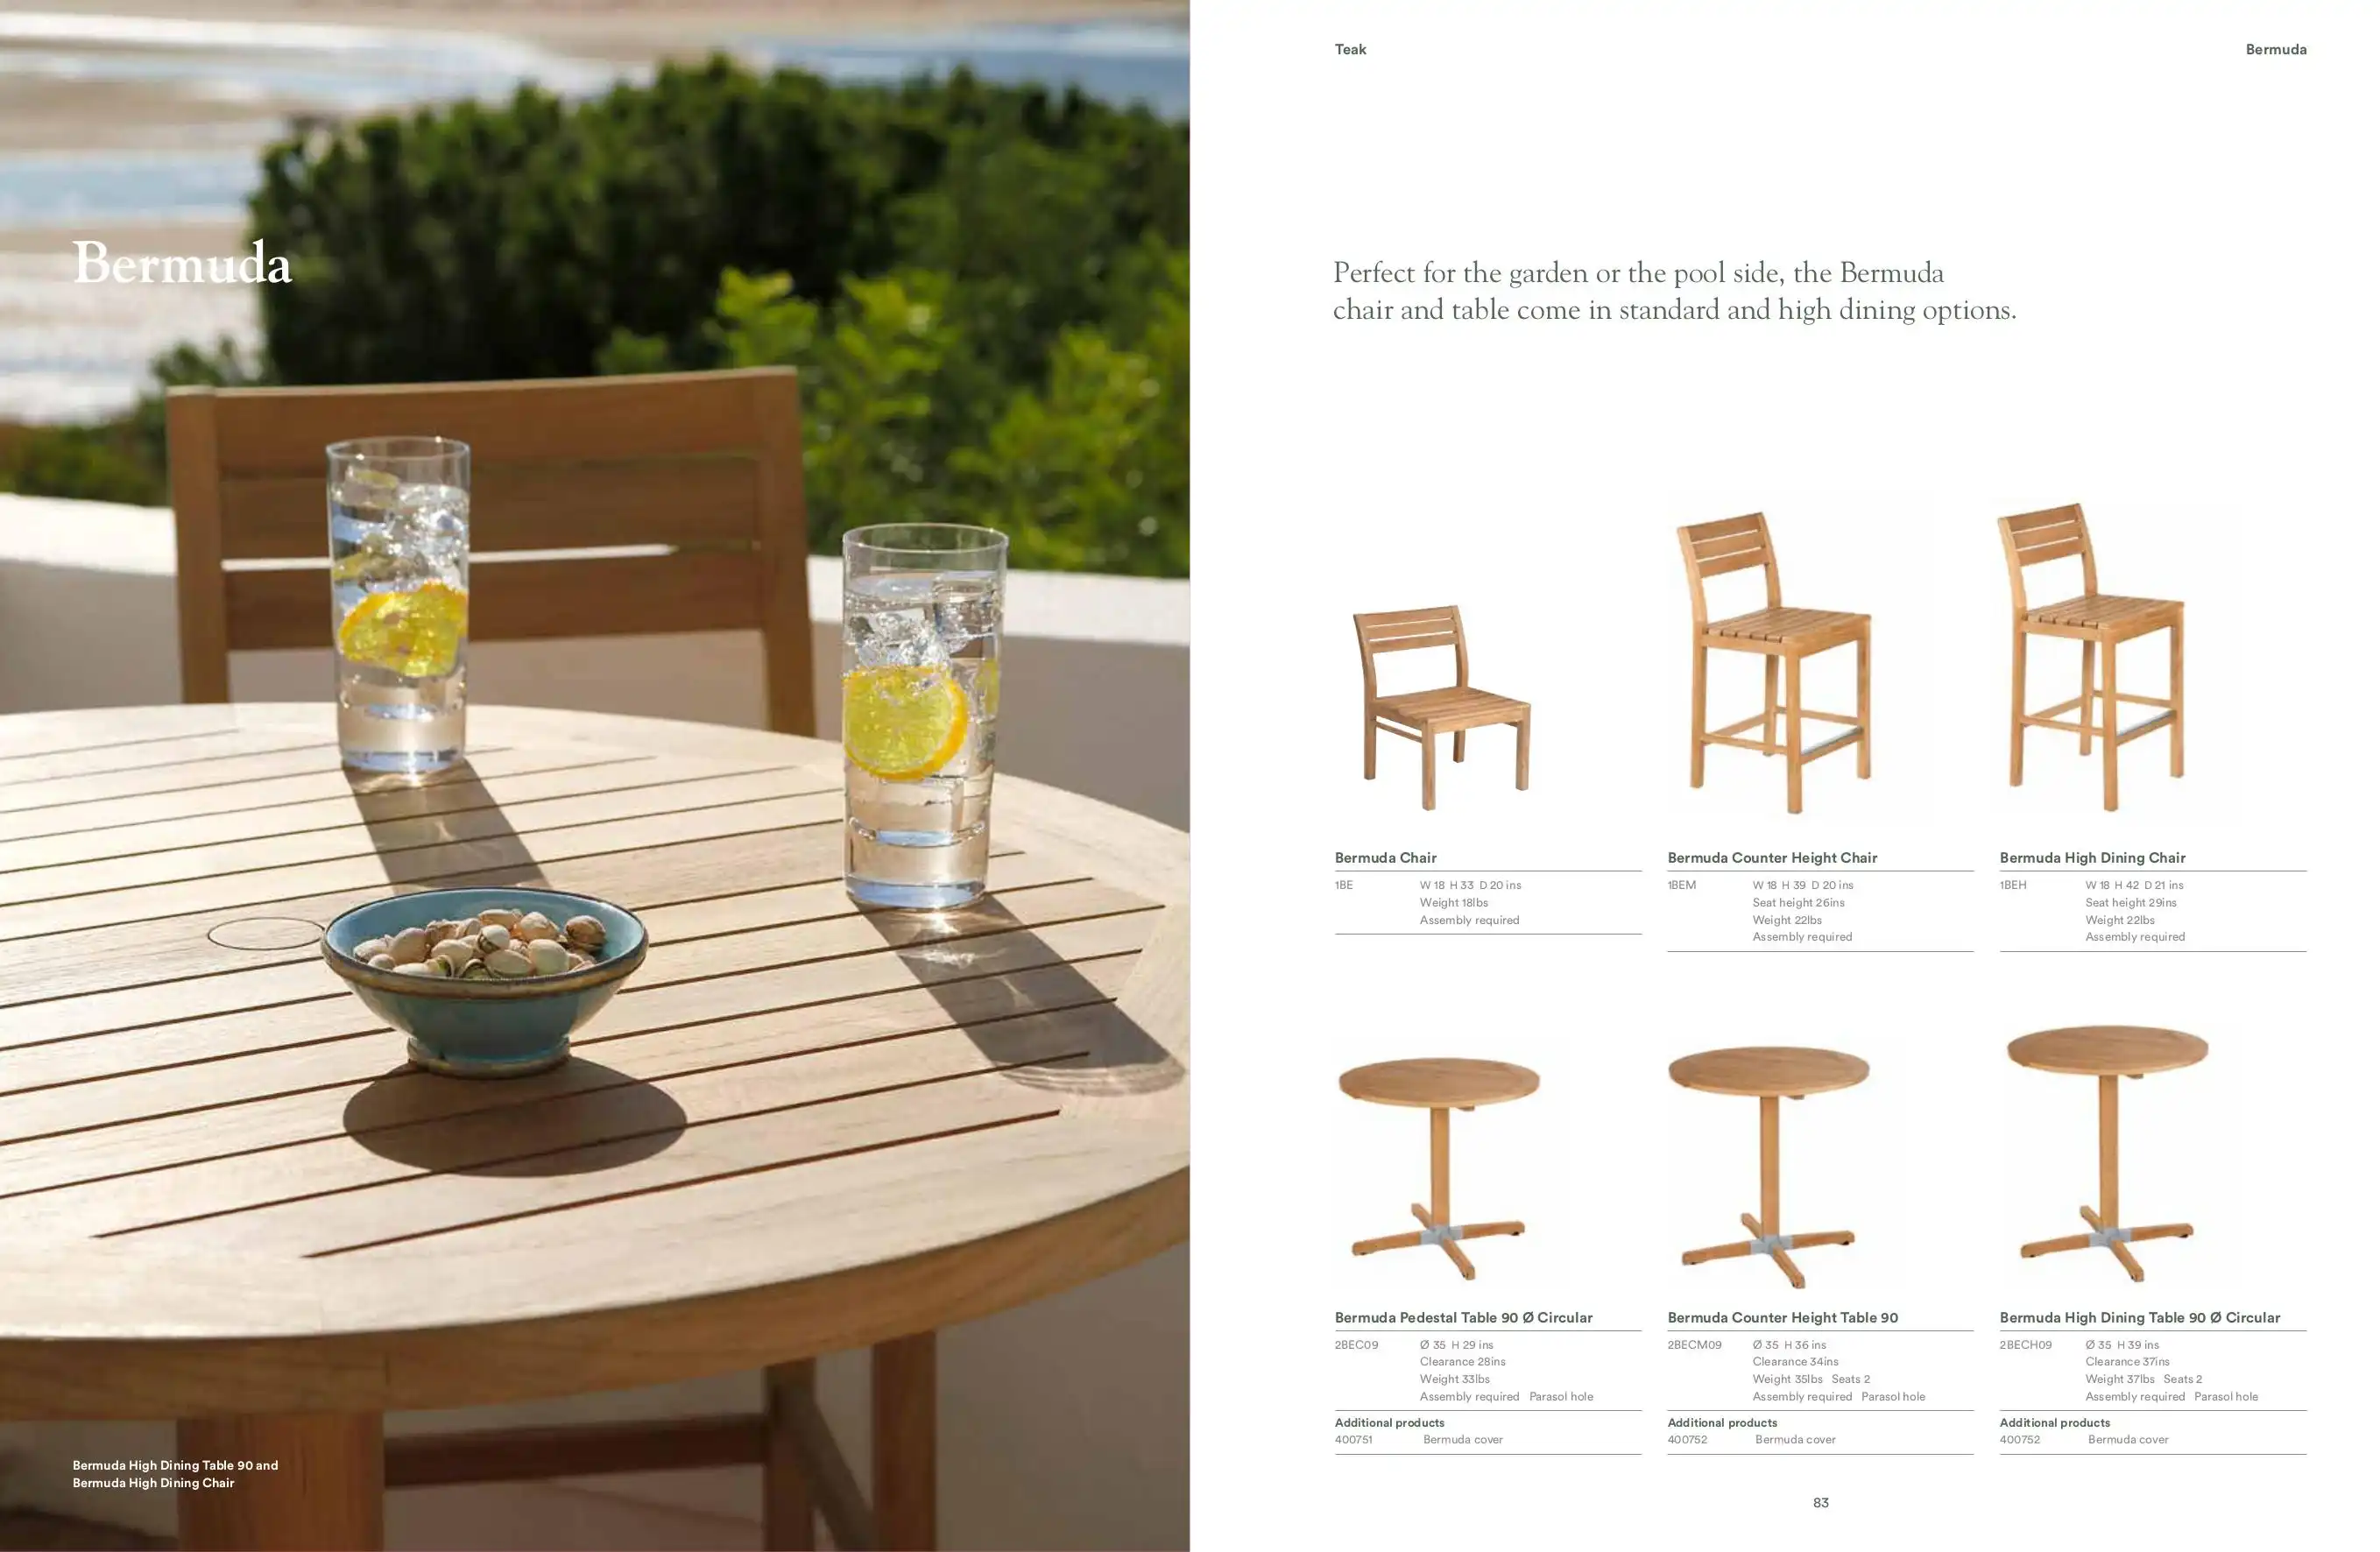 BERMUDA (Teak) Chairs & Tables by Barlow Tyrie